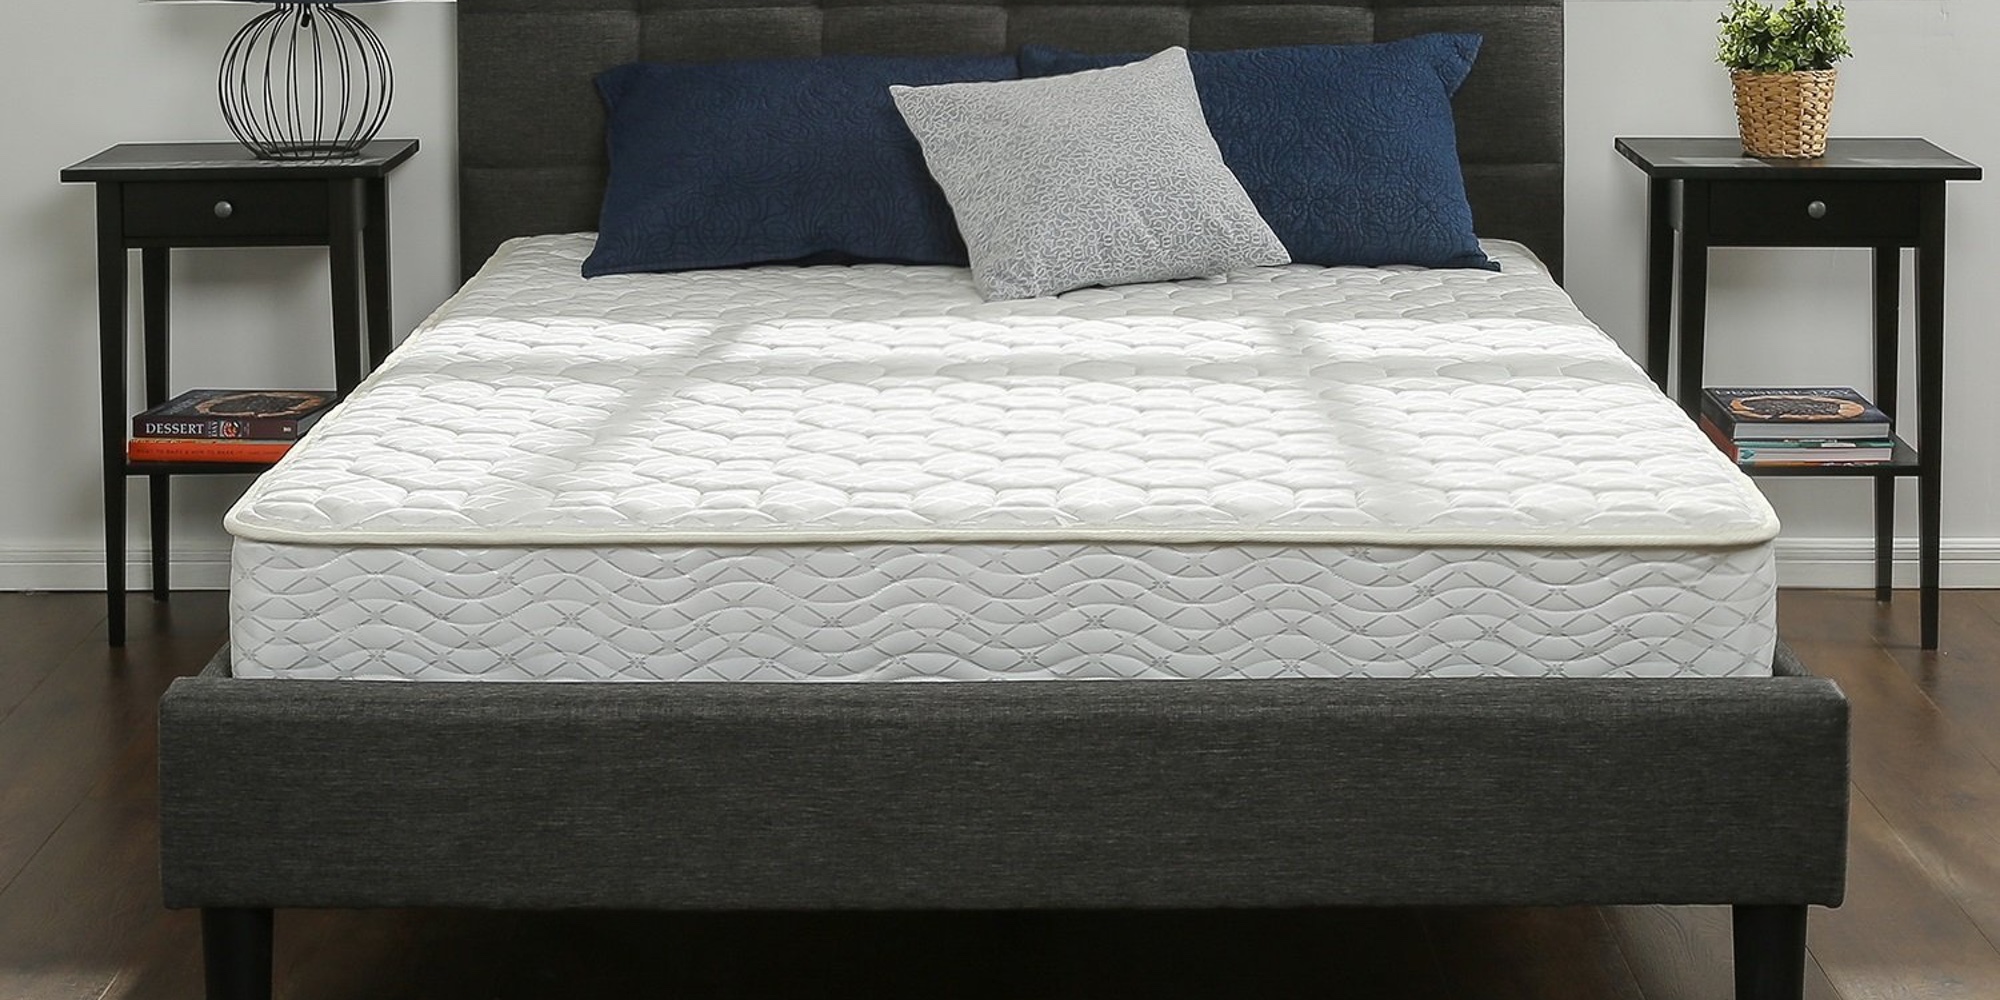 zinus 12 inch foam and spring mattress